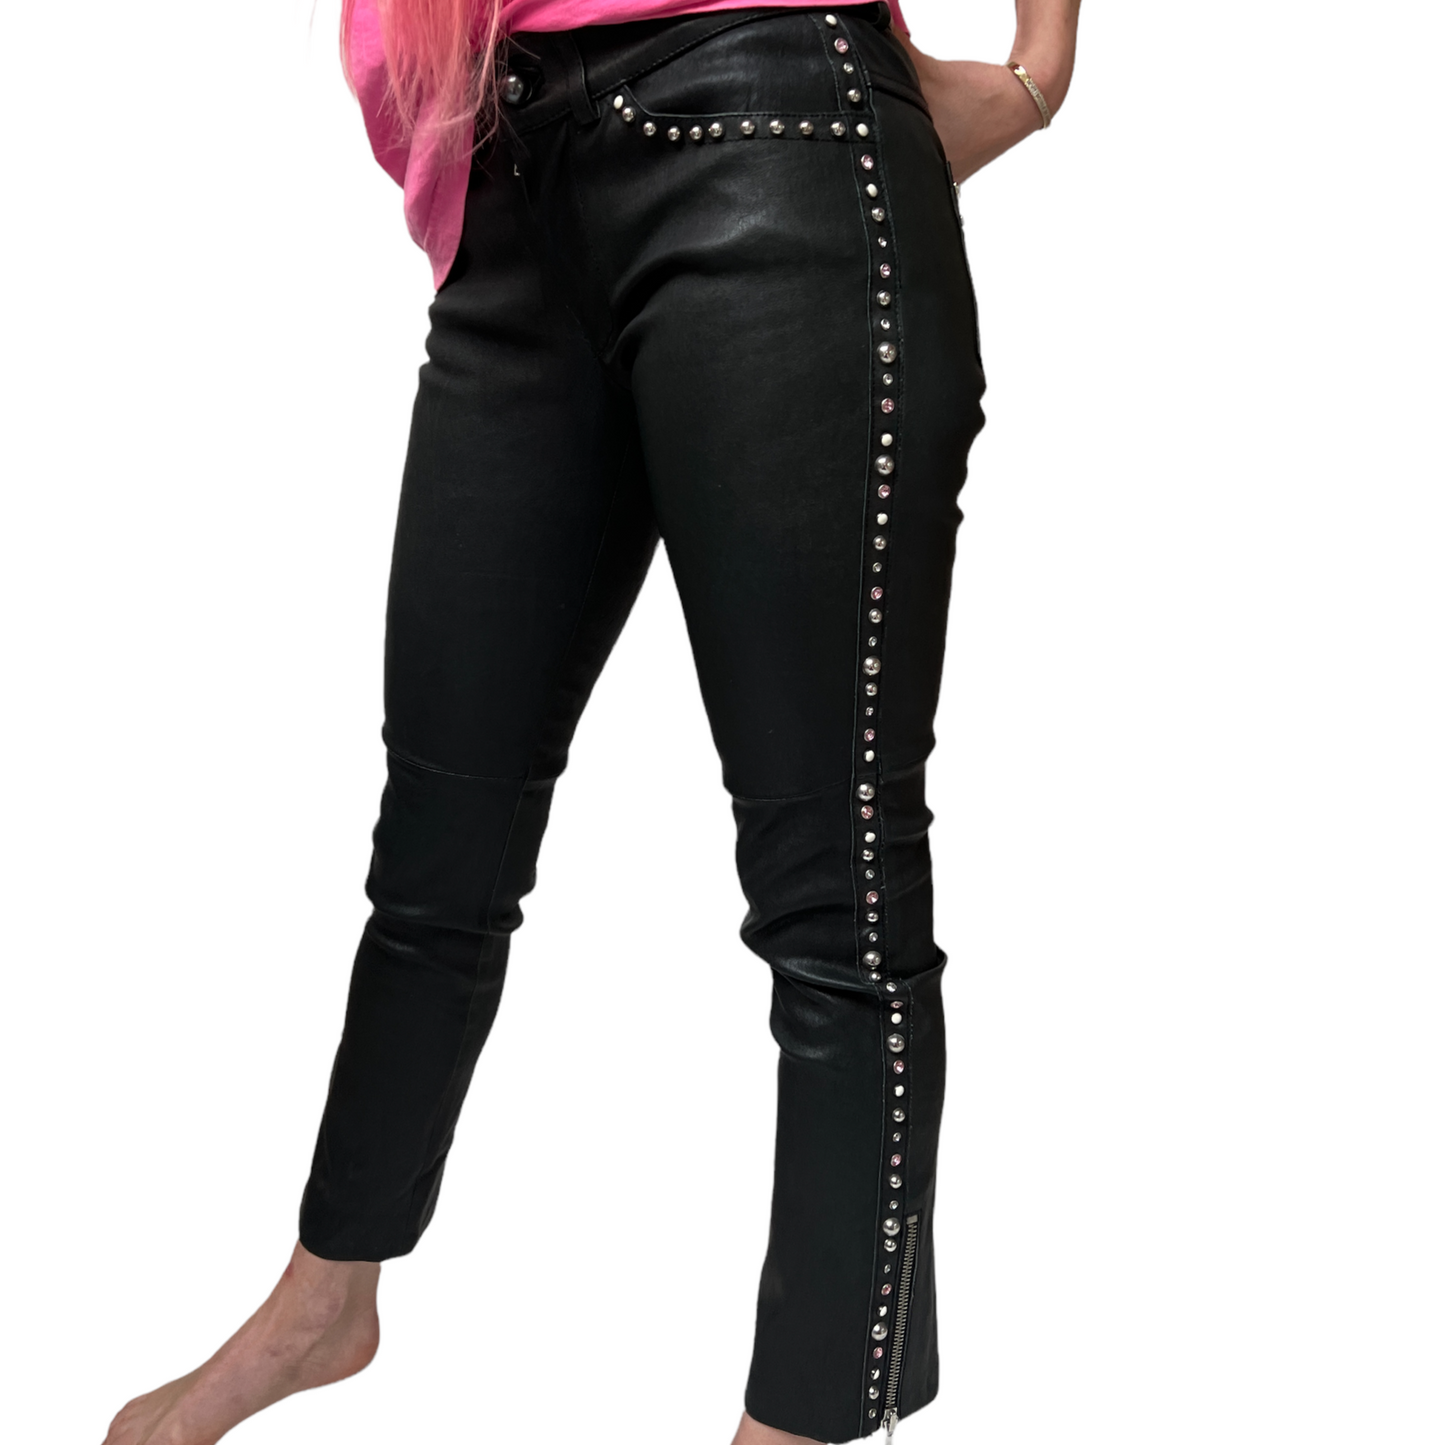 Black Leather Pants with Rhinestones - XS